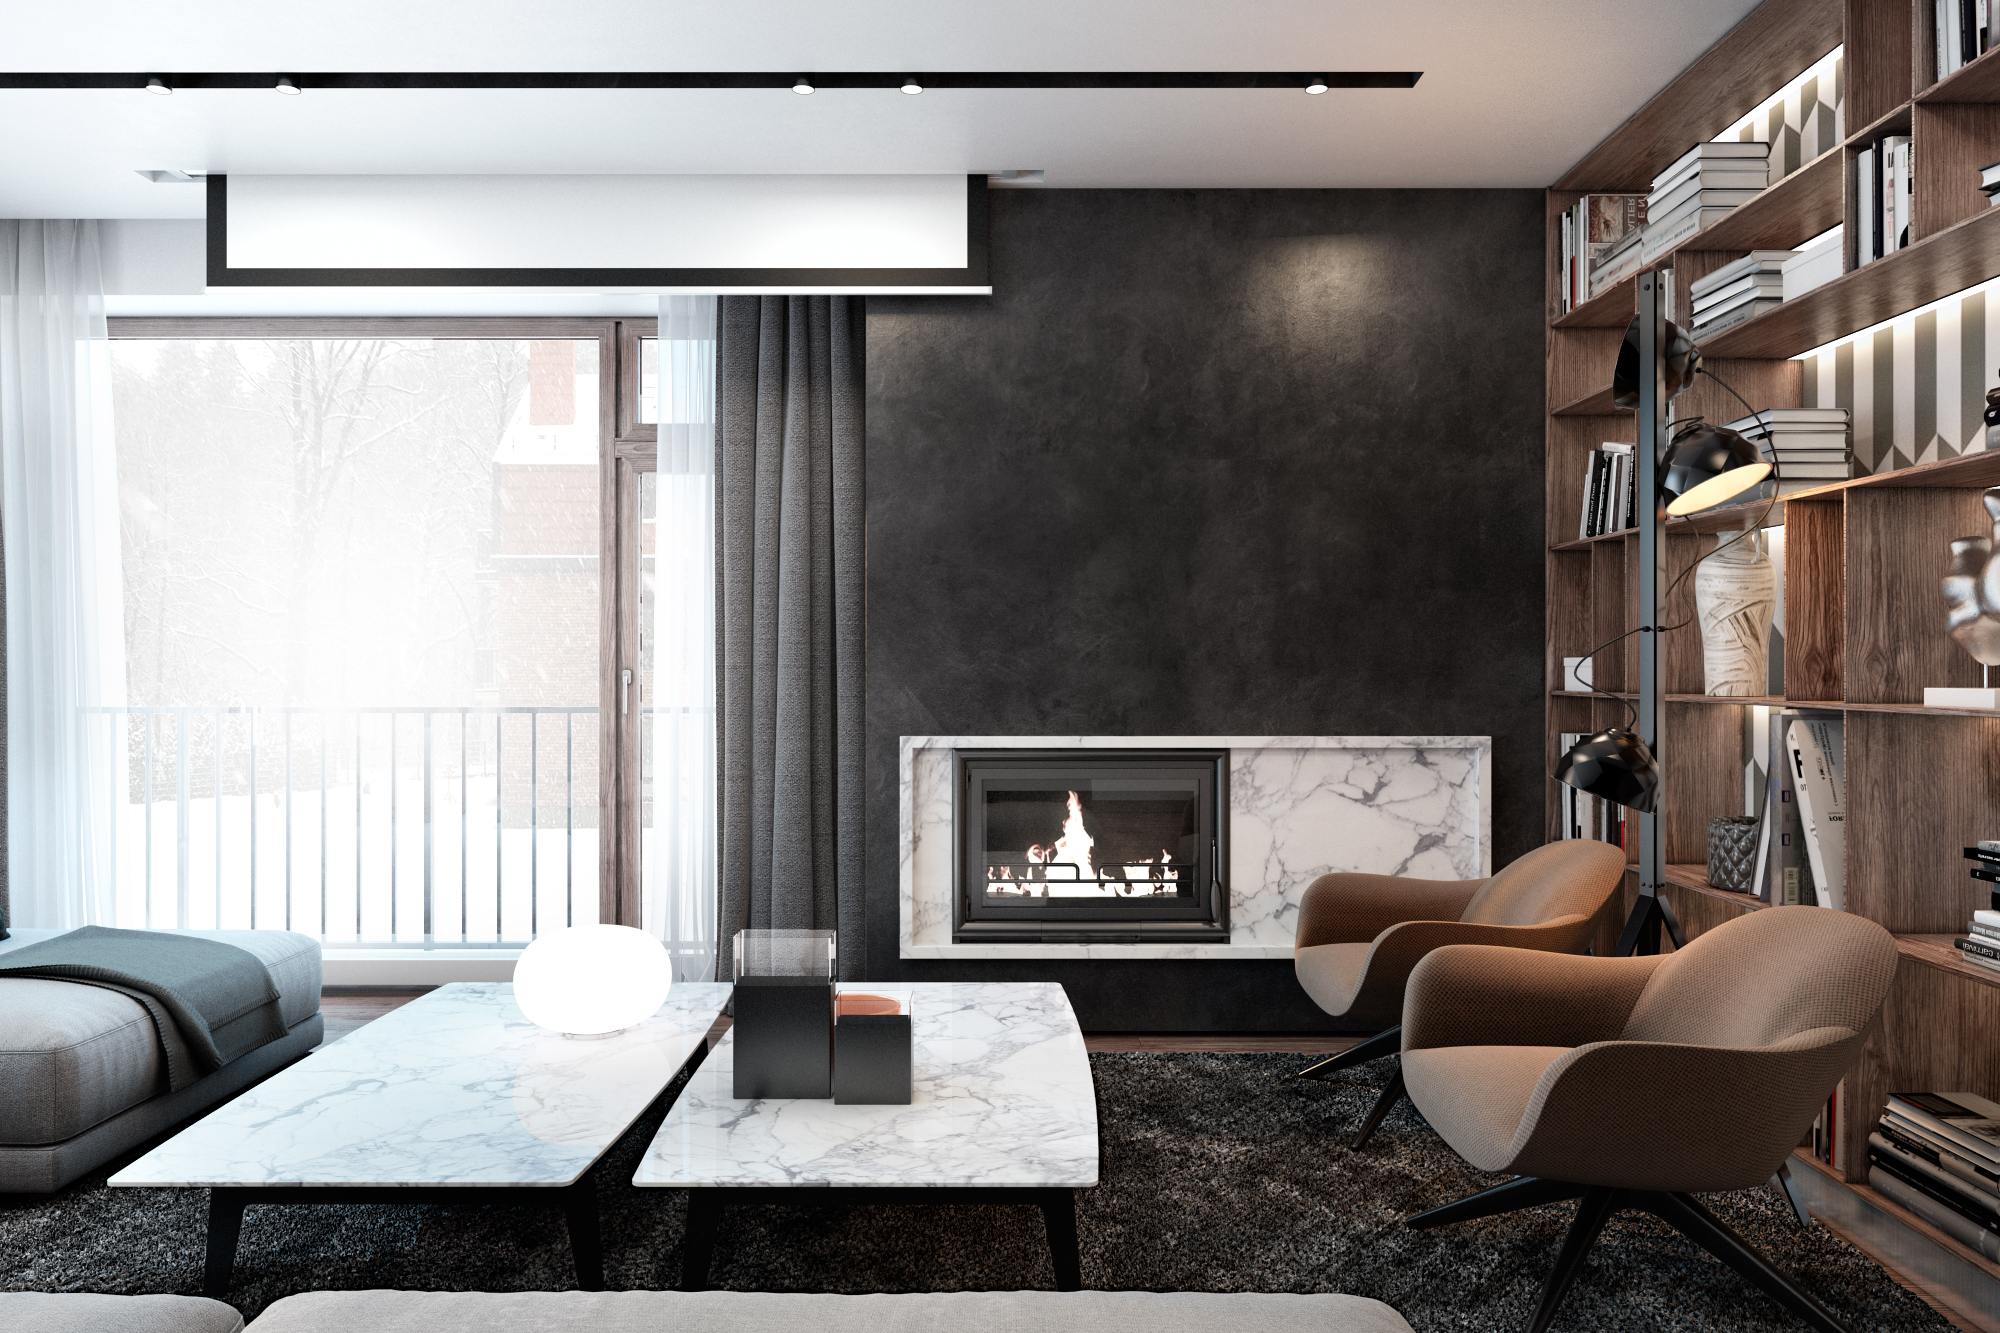 Get Decorating With This Amazing House Interior Design!